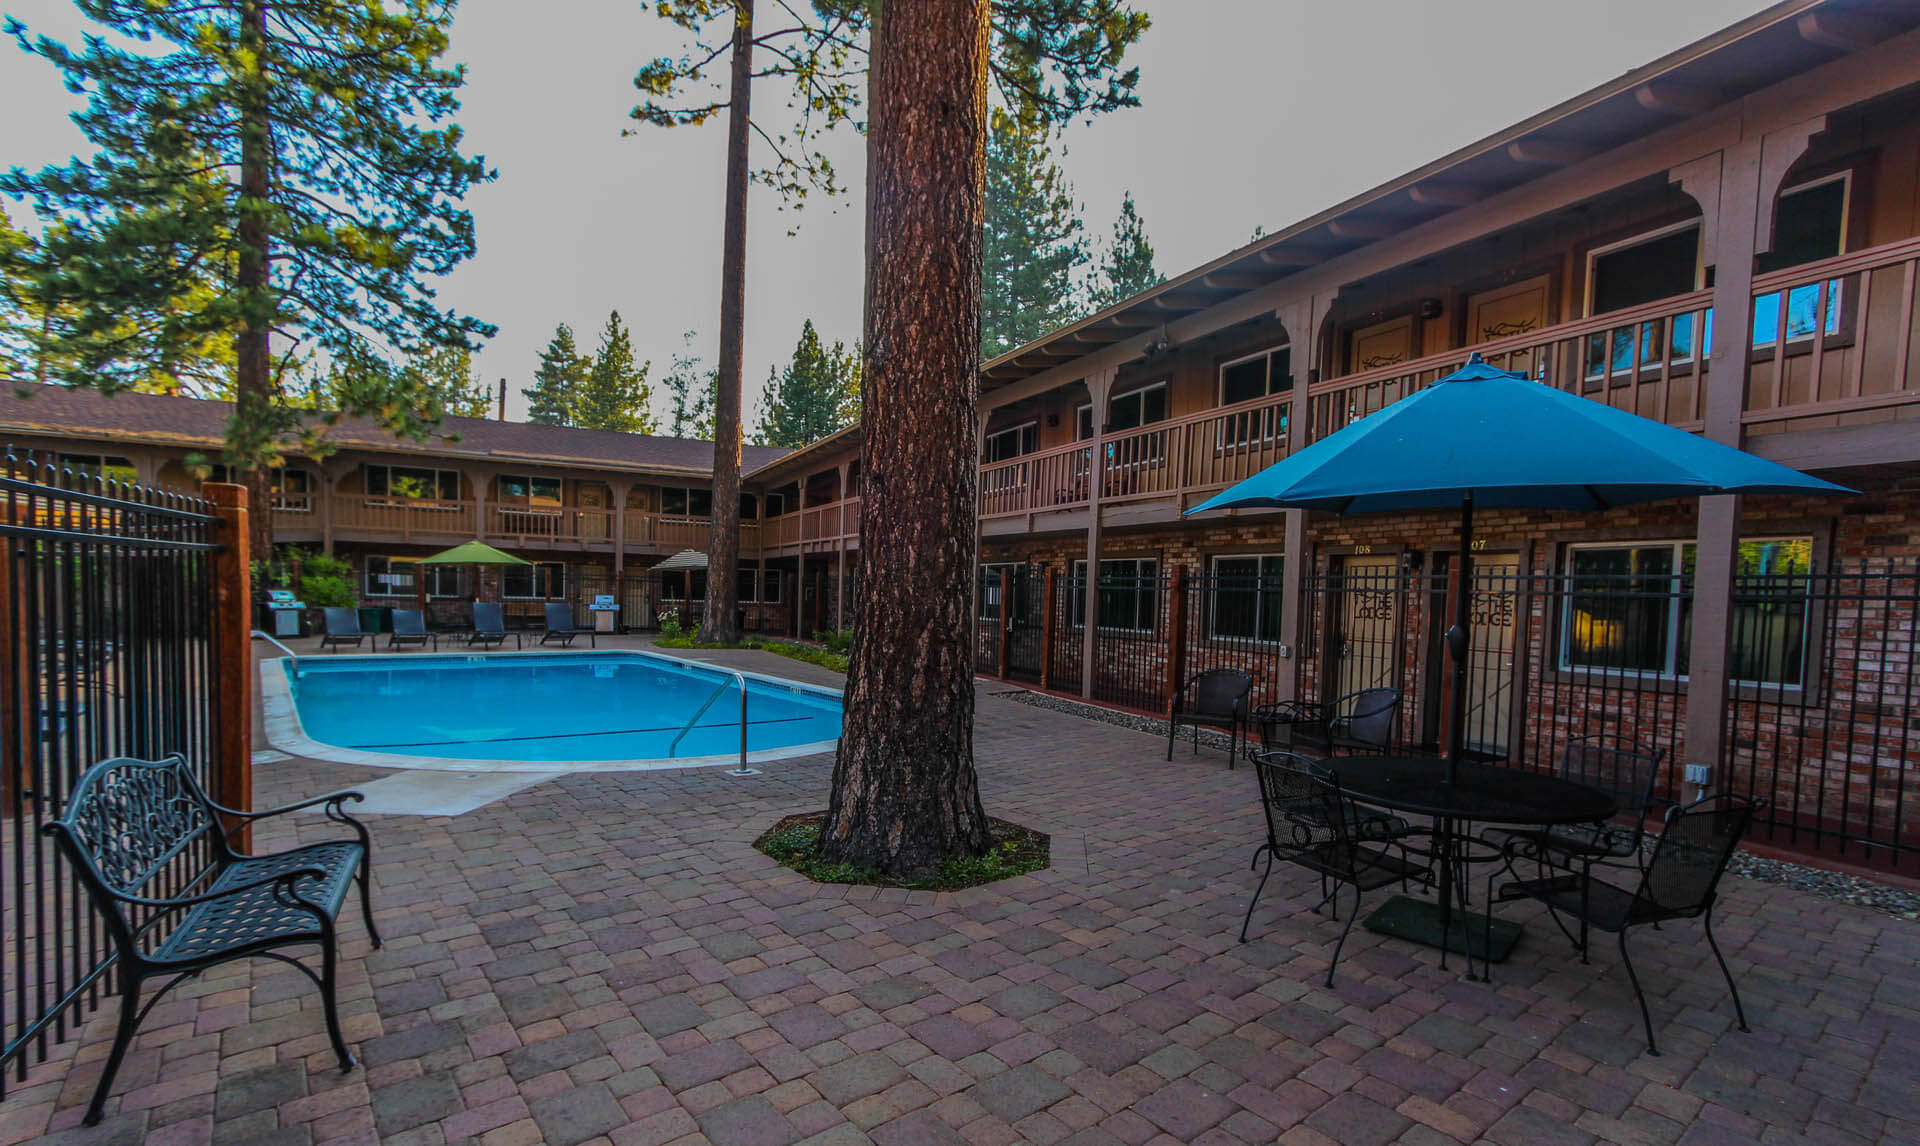 A spacious outdoor swimming pool at VRI's The Lodge at Lake Tahoe in California.